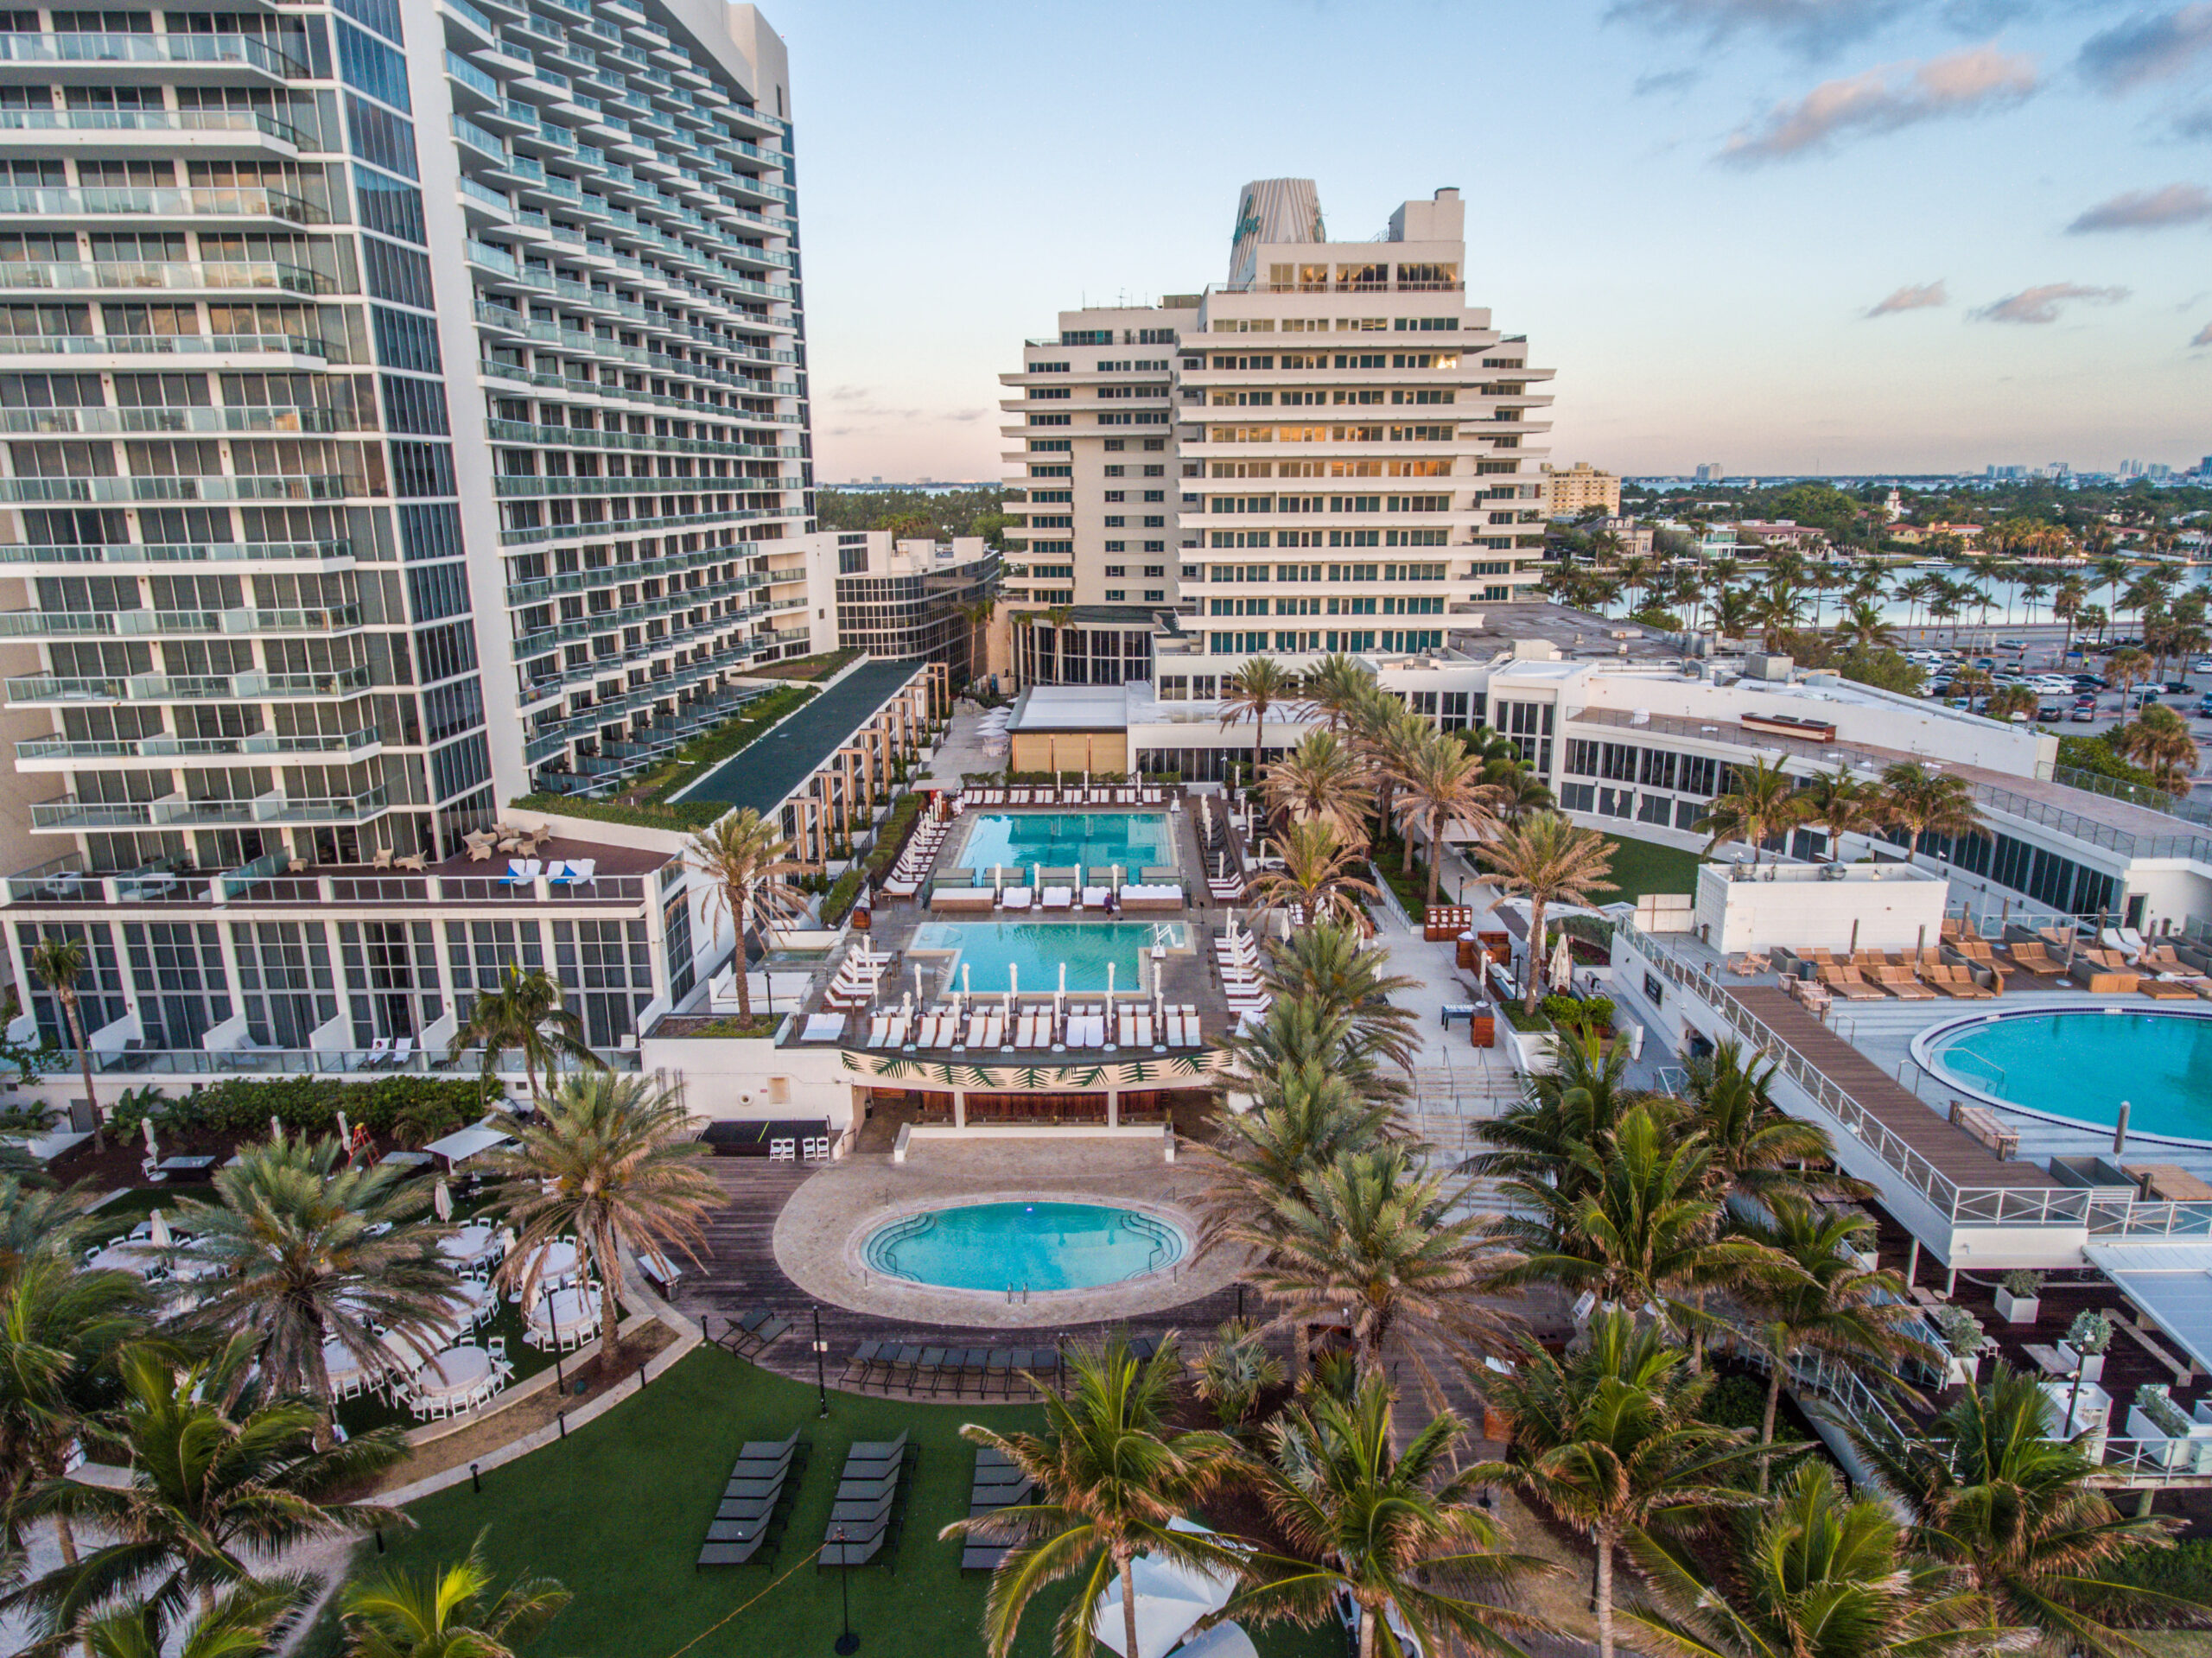 Aerial View of the Nobu Hotel Miami Beach - Adam Goldberg Photography